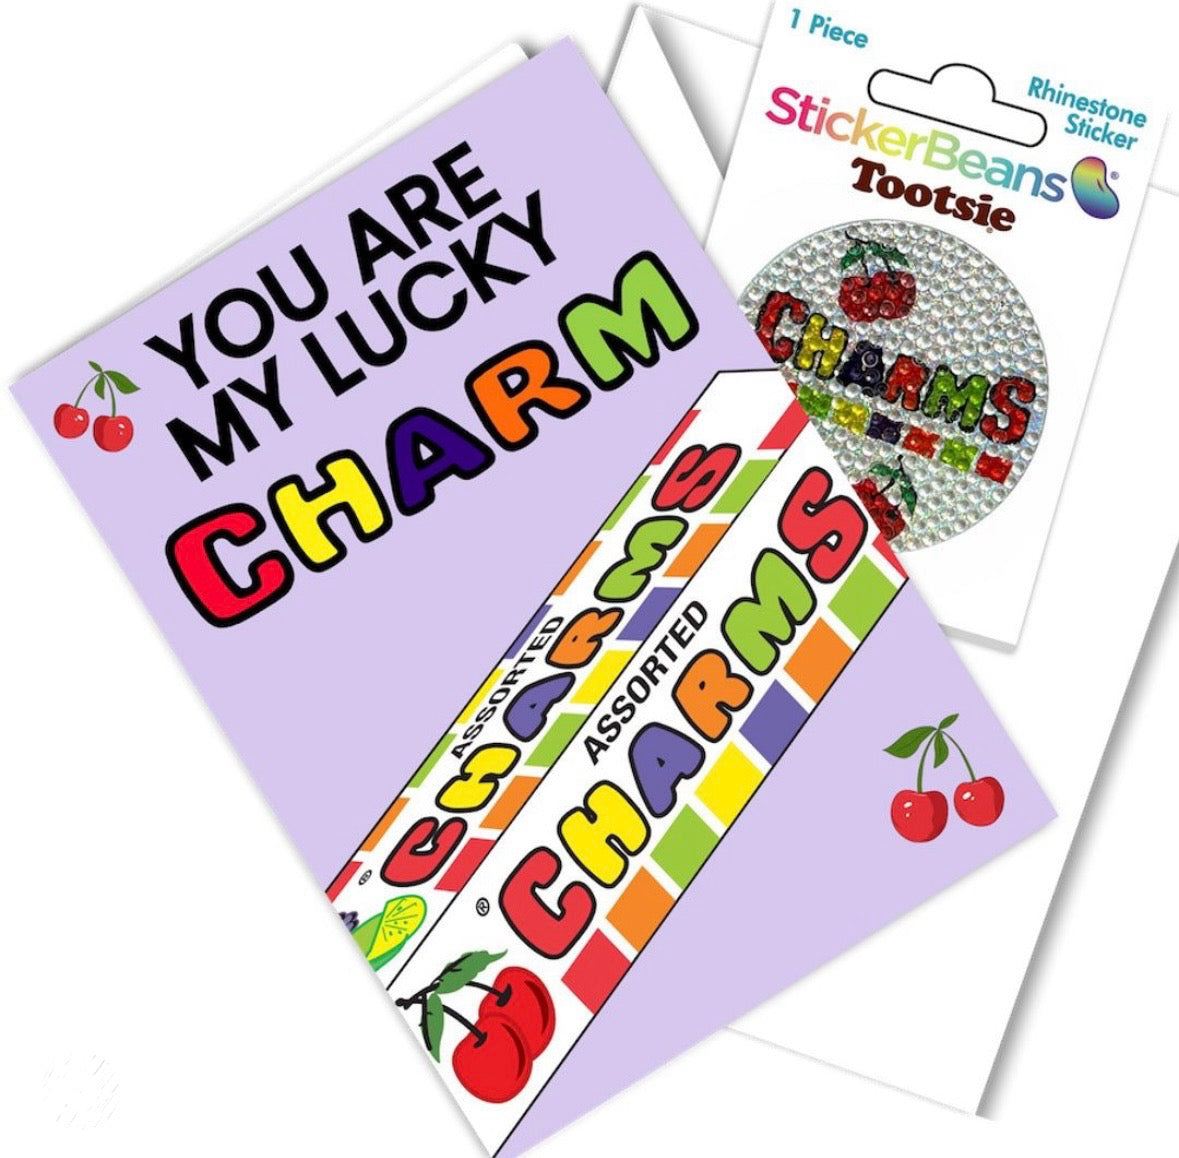 StickerBeans Greeting Card/StickerBean Combo